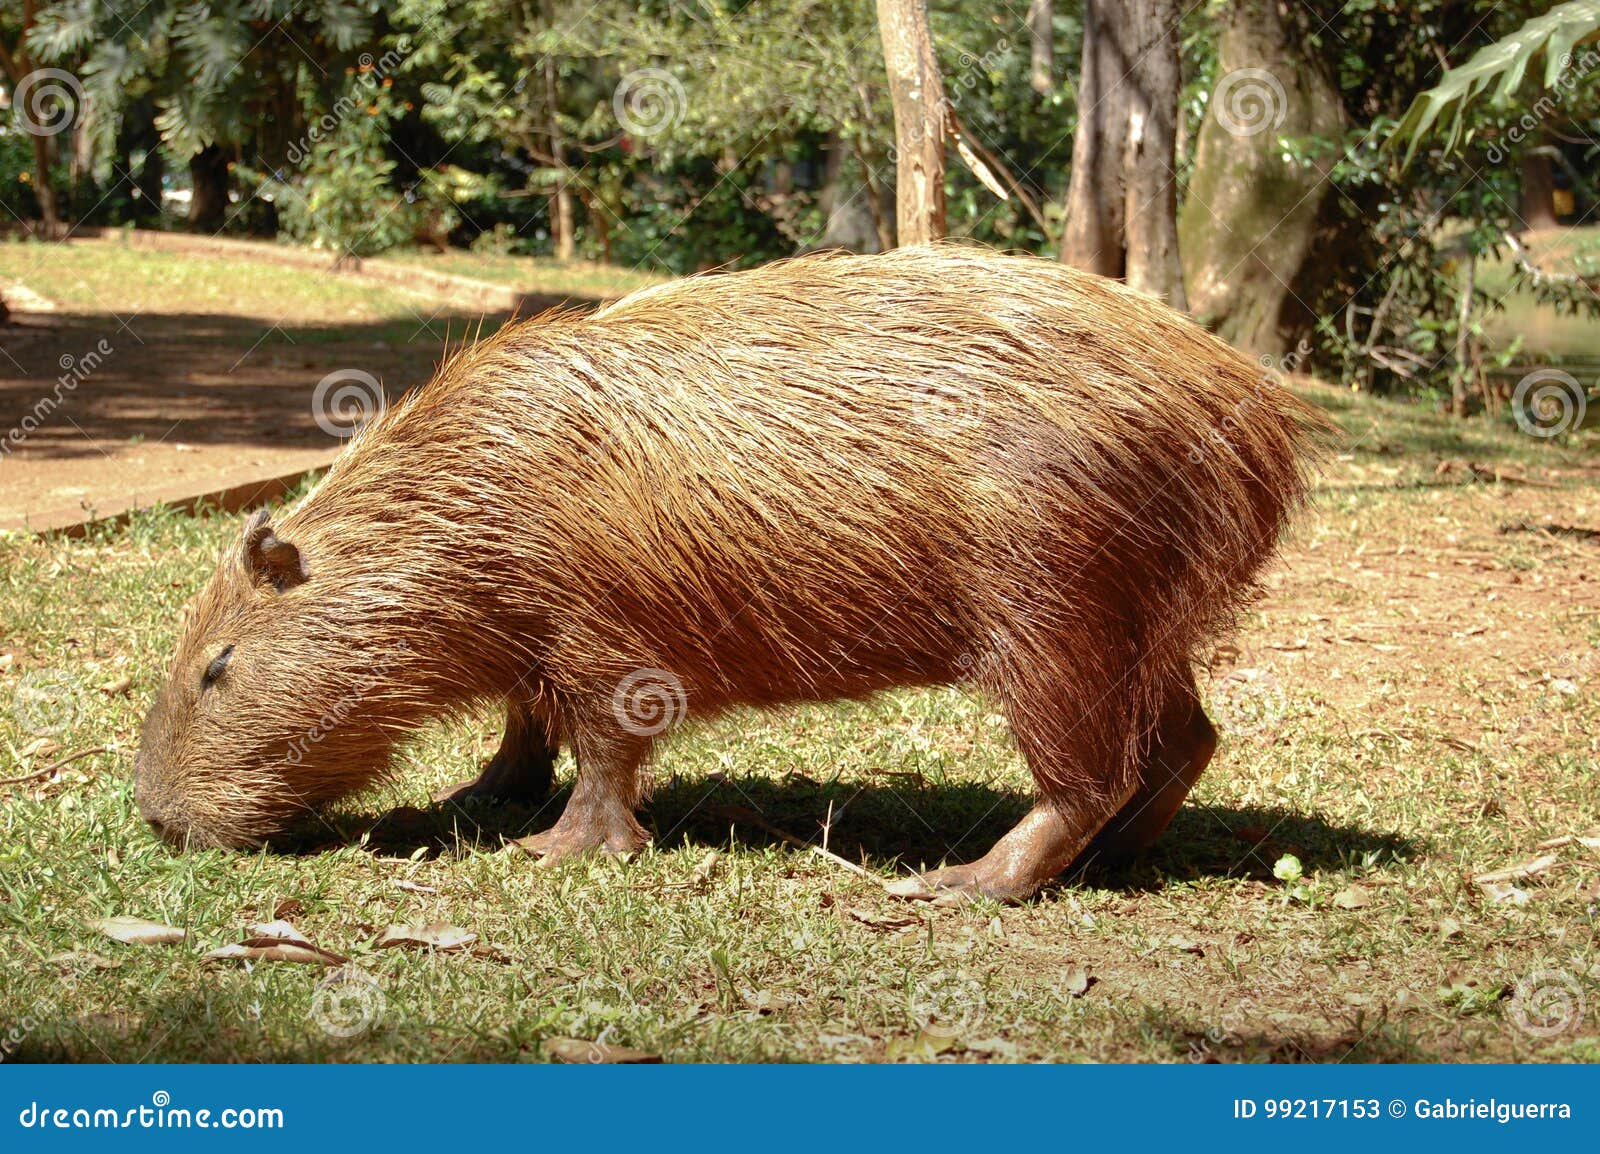 capivara eating grass. big rat mammal feeding of grass. huge capybara free on a park.